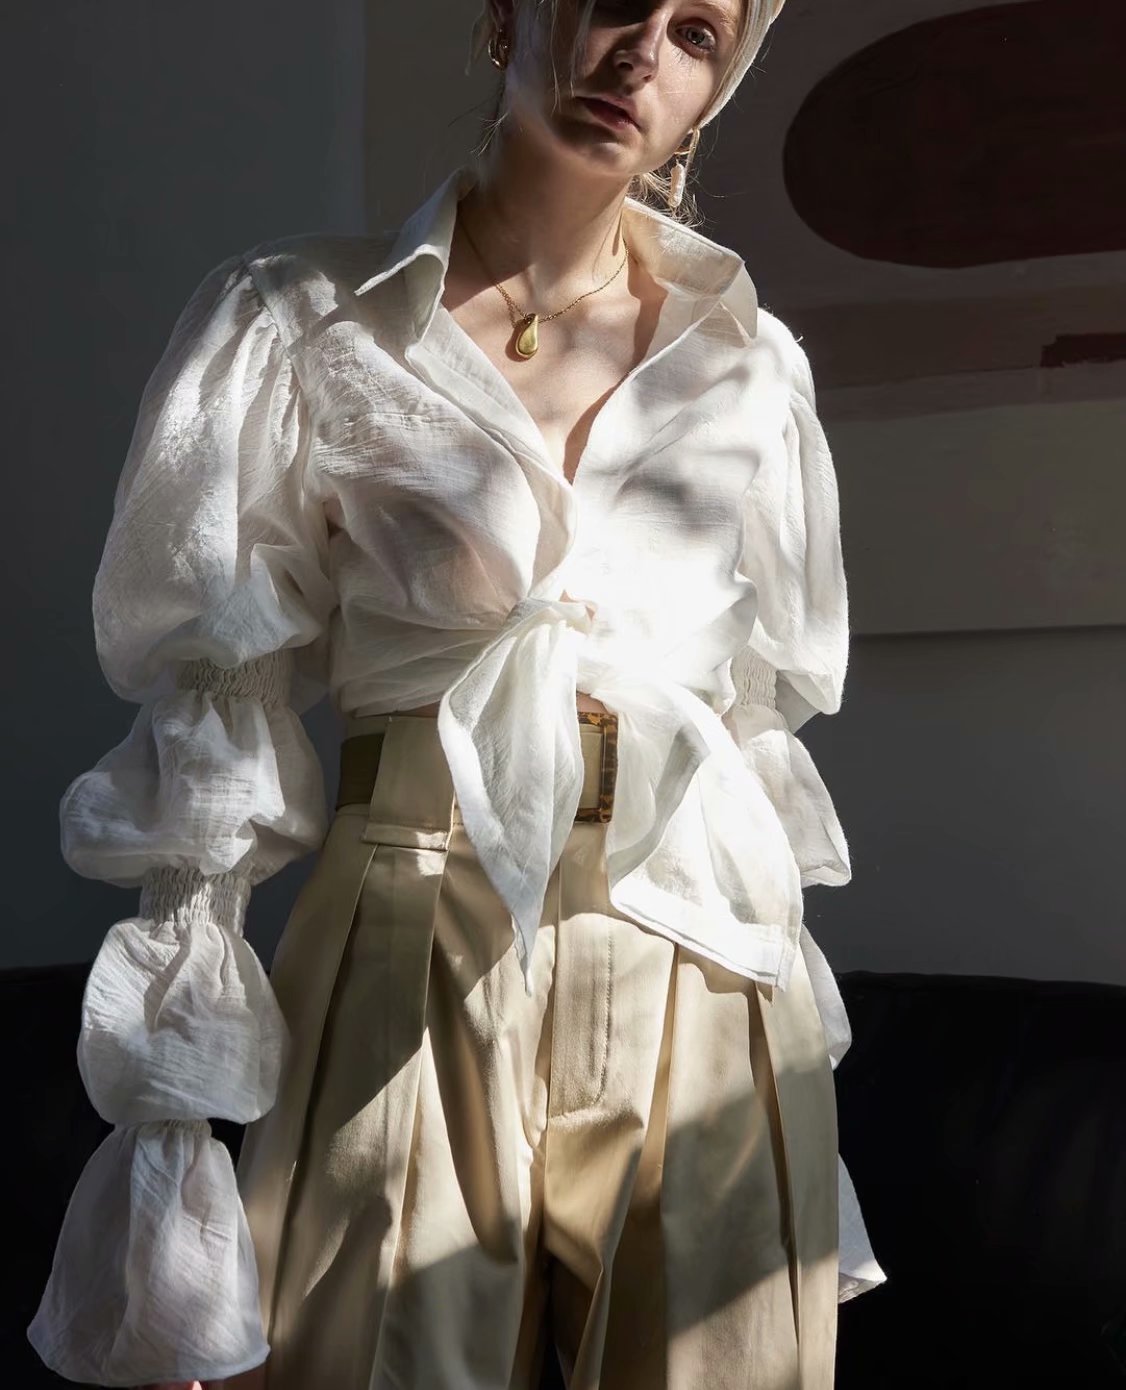 Chicdear Minimalist Women Elegant Long Shirt Turn Down Collar Puff Sleeve Blouse Female Loose White Office Lady Tops